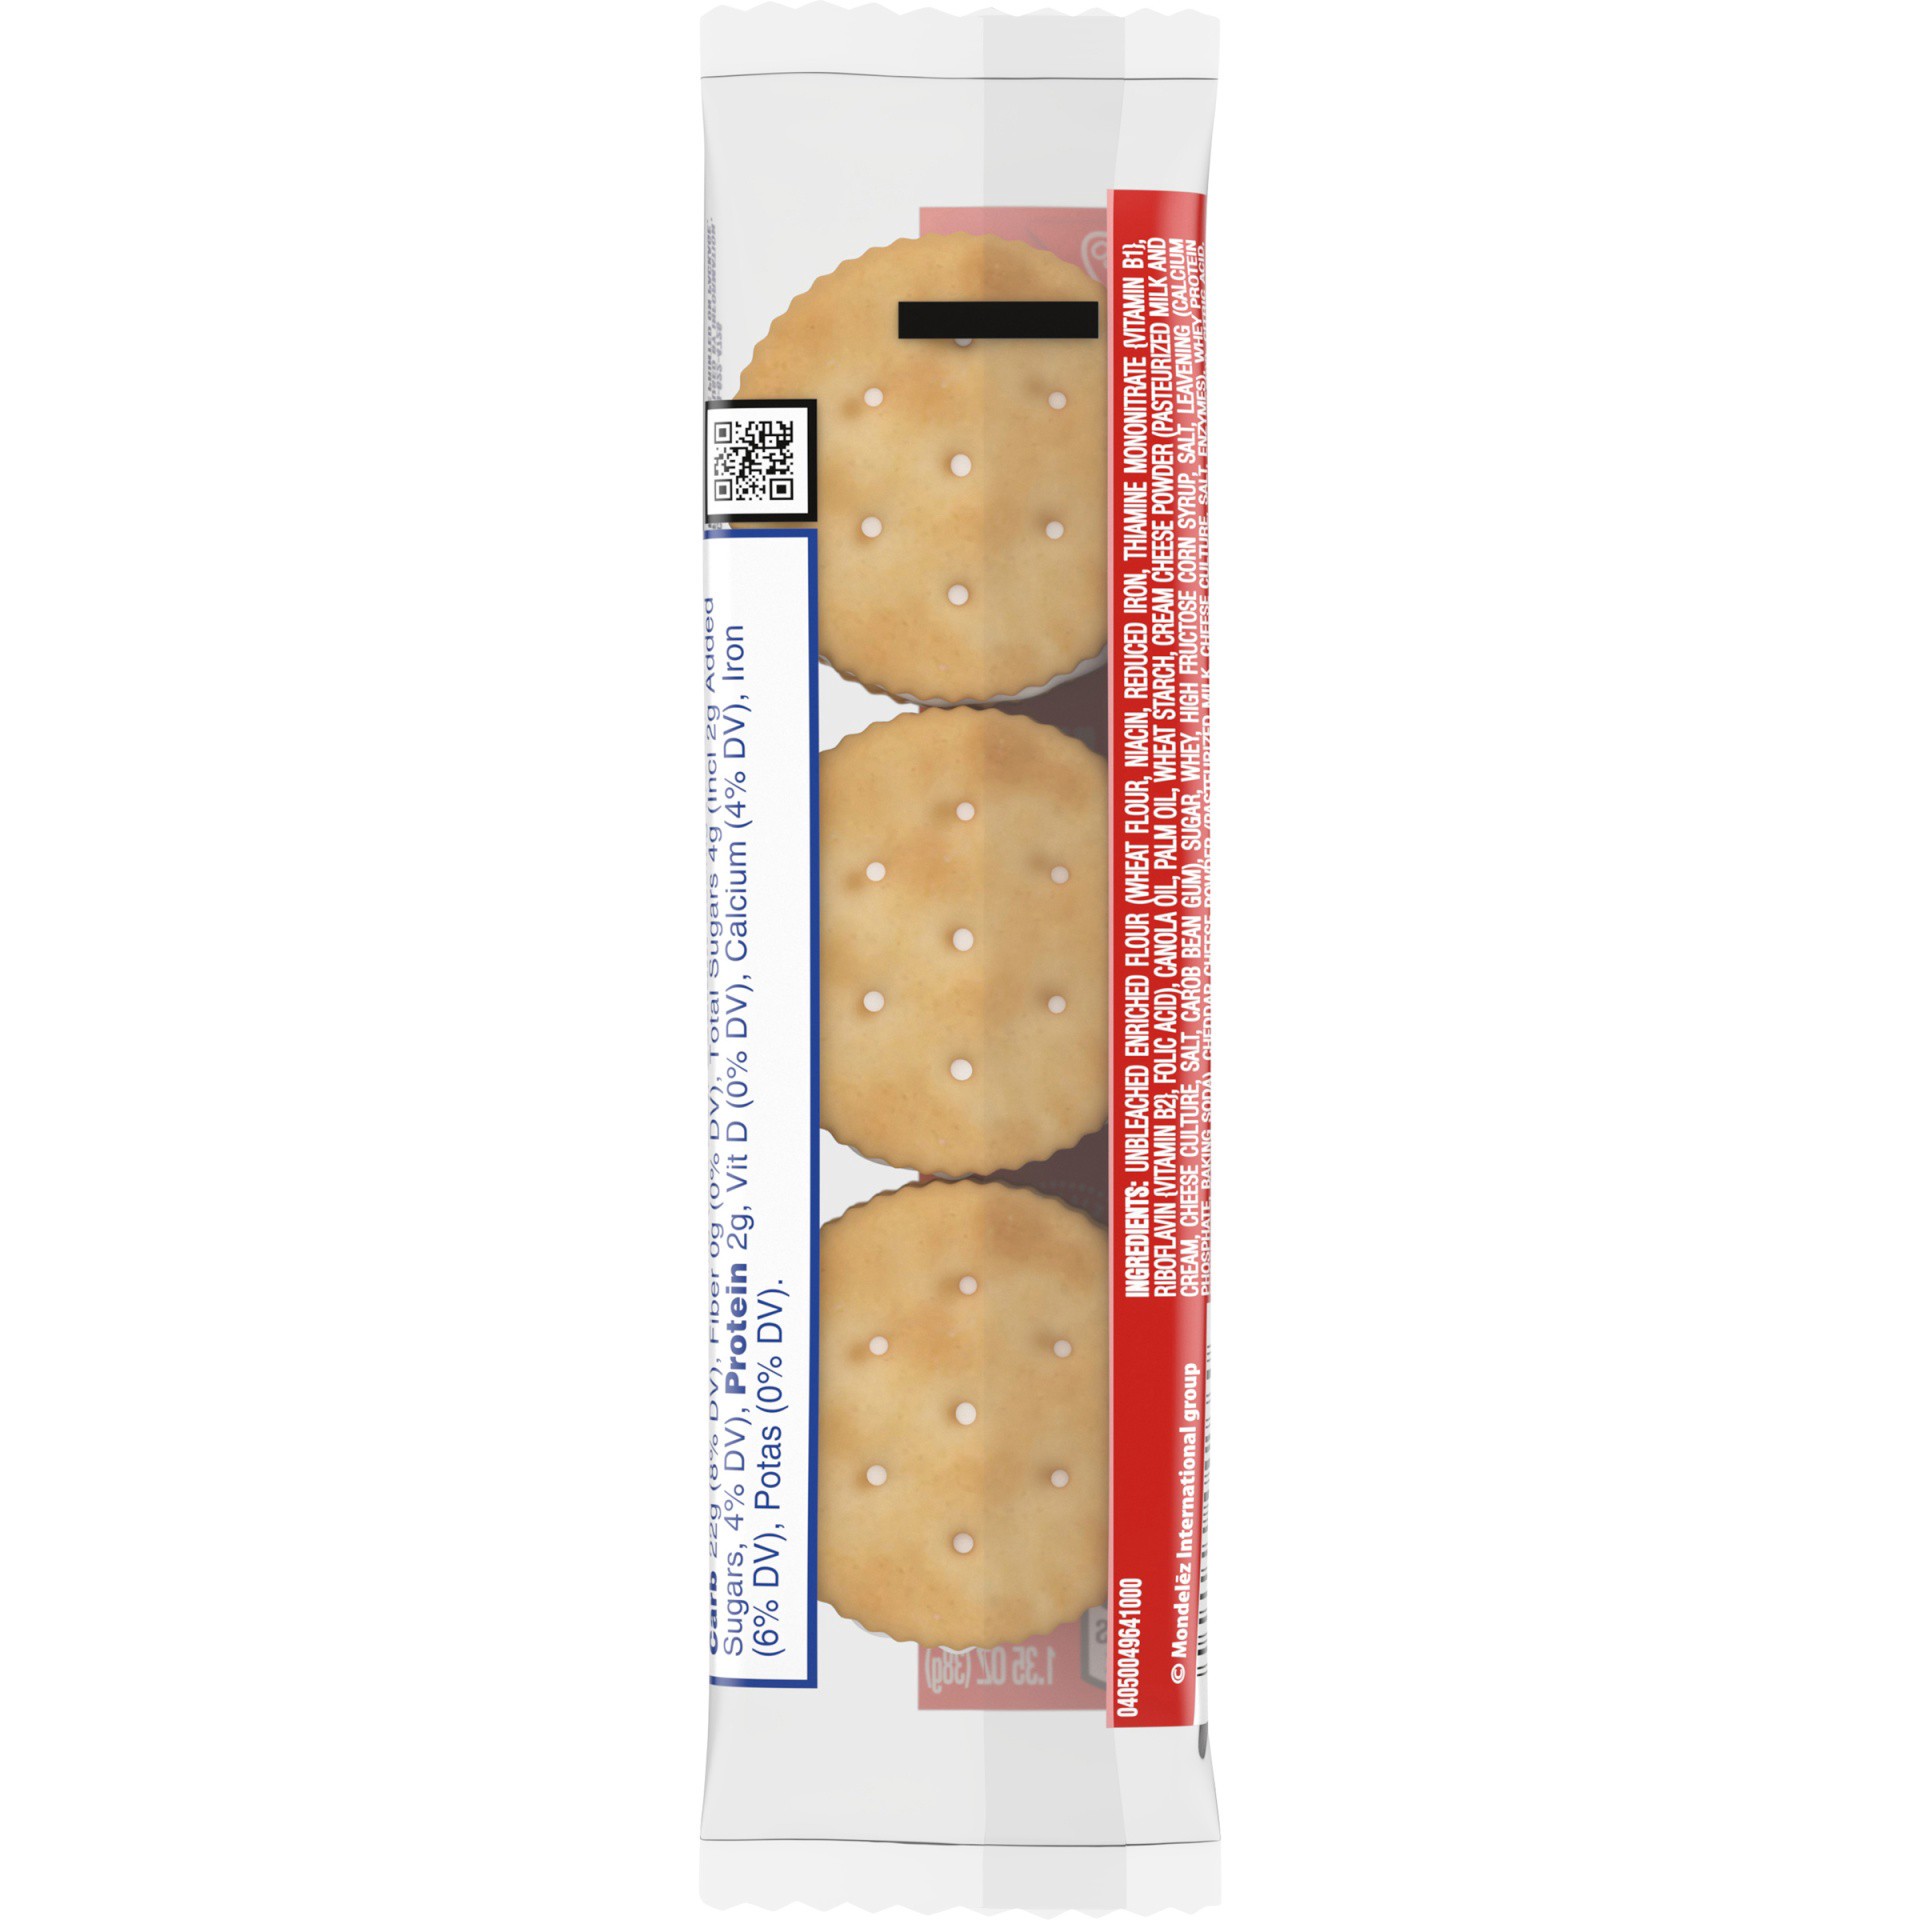 slide 8 of 9, RITZ Peanut Butter Sandwich Crackers, Family Size, 1 - 1.35 oz Pack
, 1.35 oz